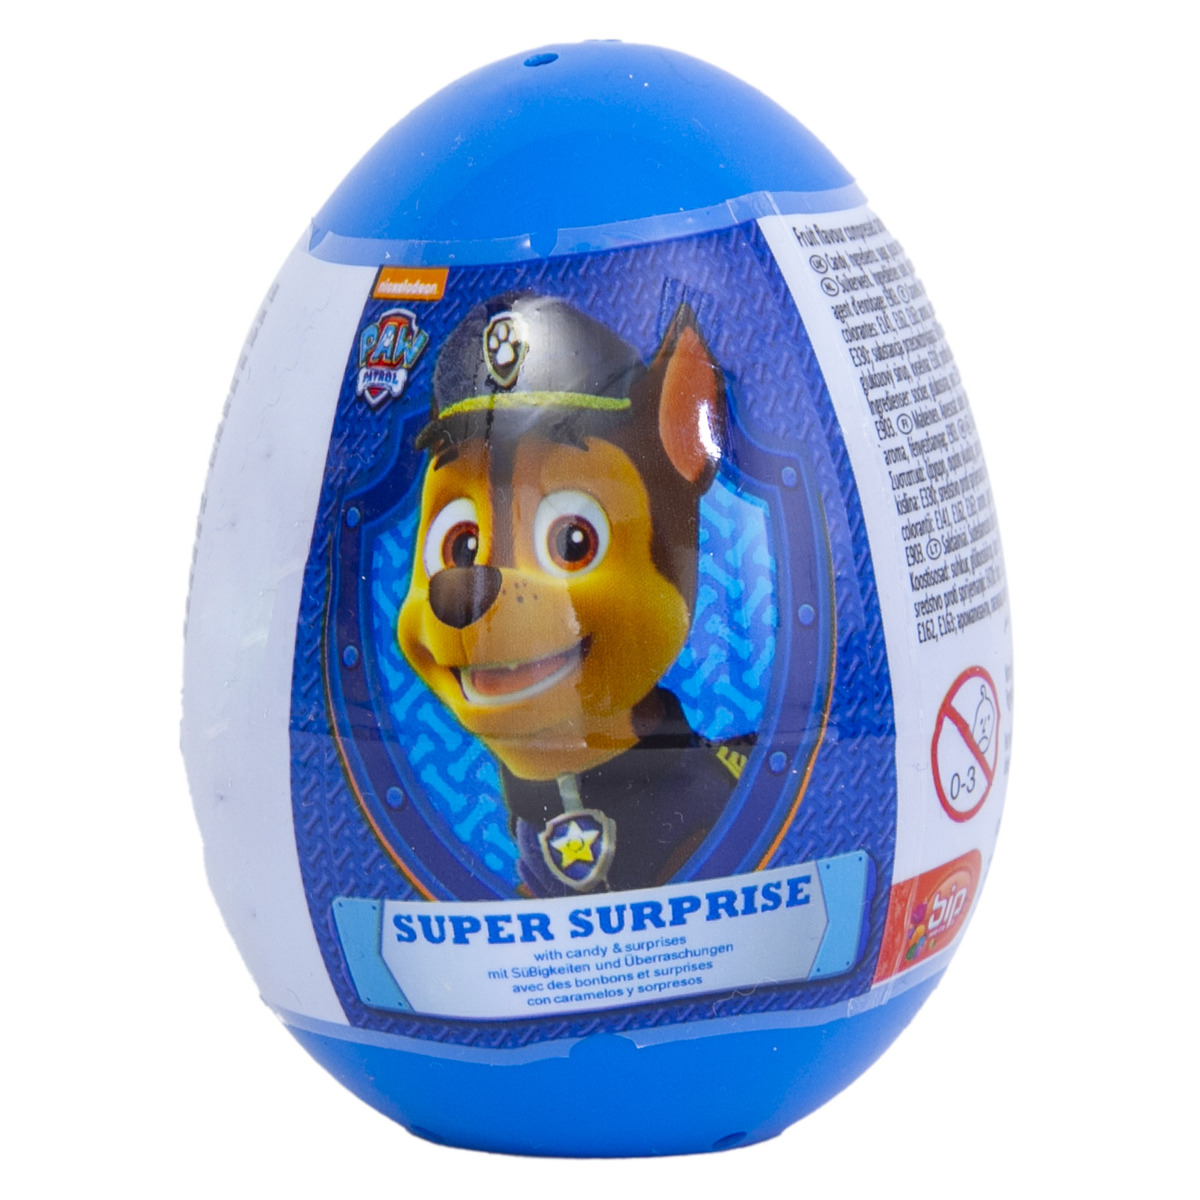 Hurtig Serena tyve Bip Paw Patrol Super Surprise Egg 10g | Candy | Lulu Qatar